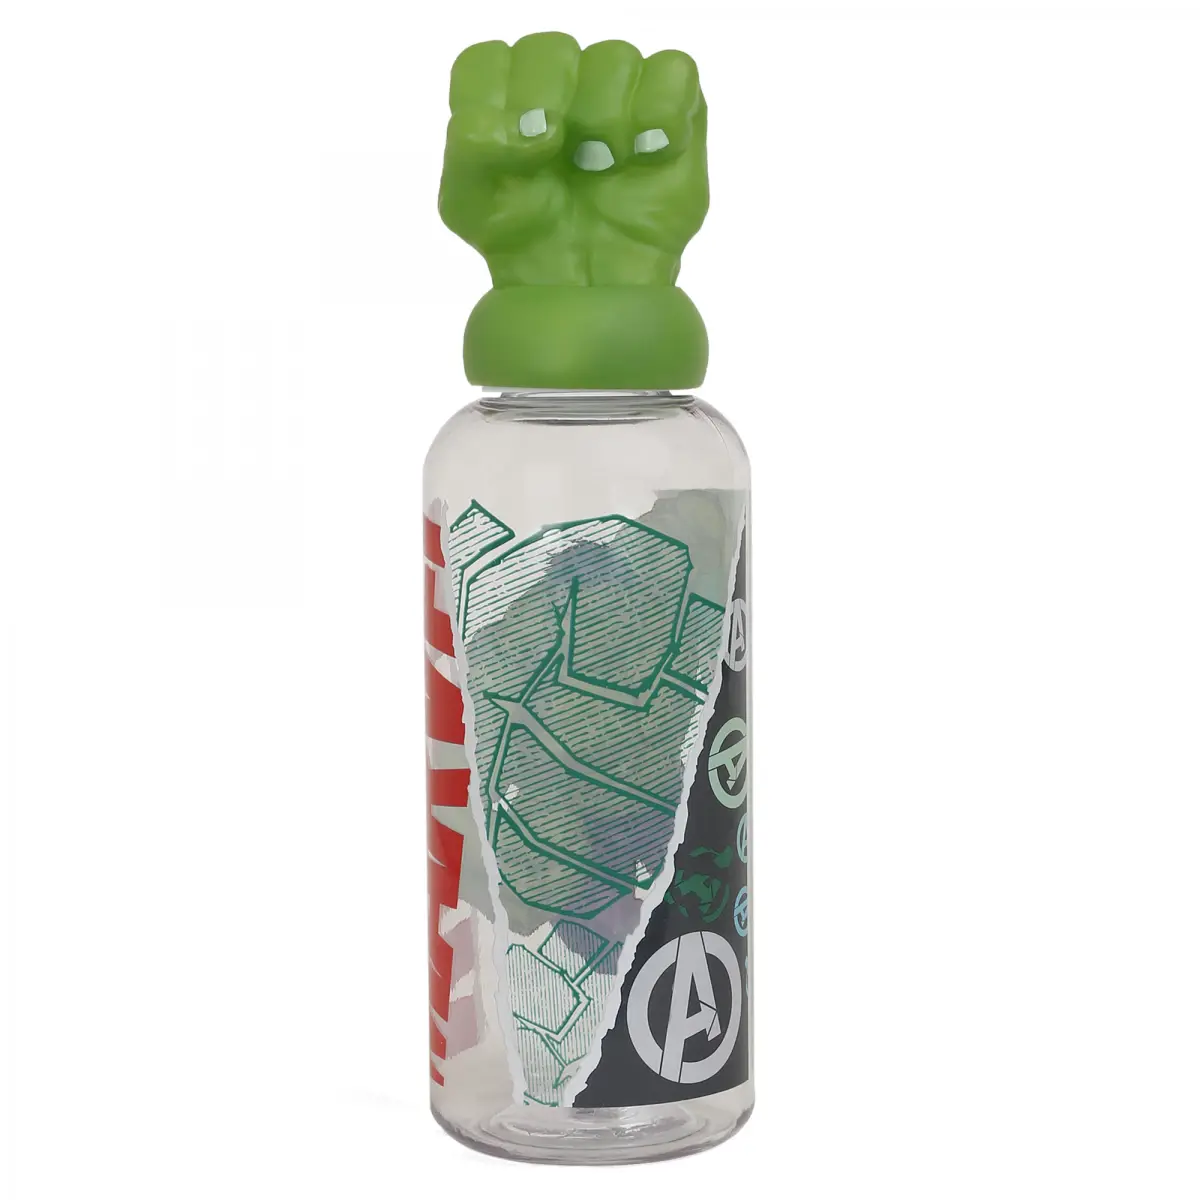 Disney Hulk Stor 3D Figurine Water Bottle, 560ml, Multicolour